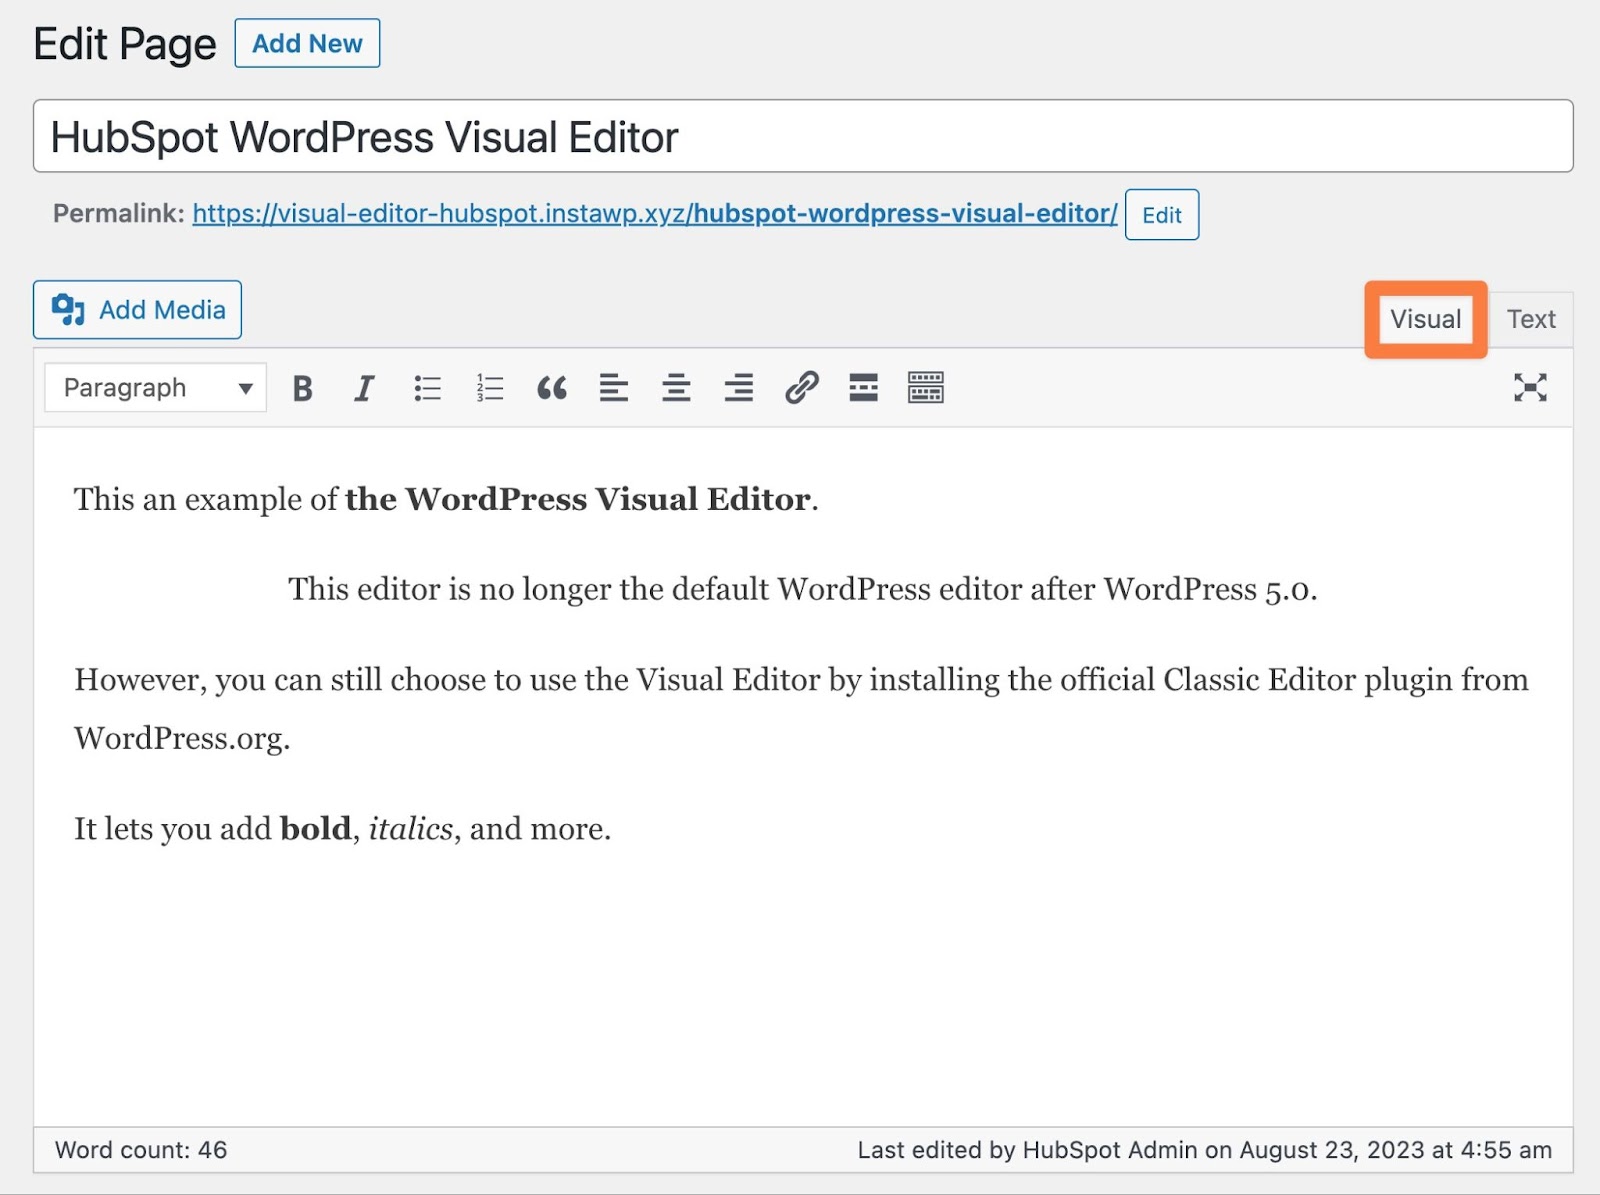 An example of the WordPress Visual Editor